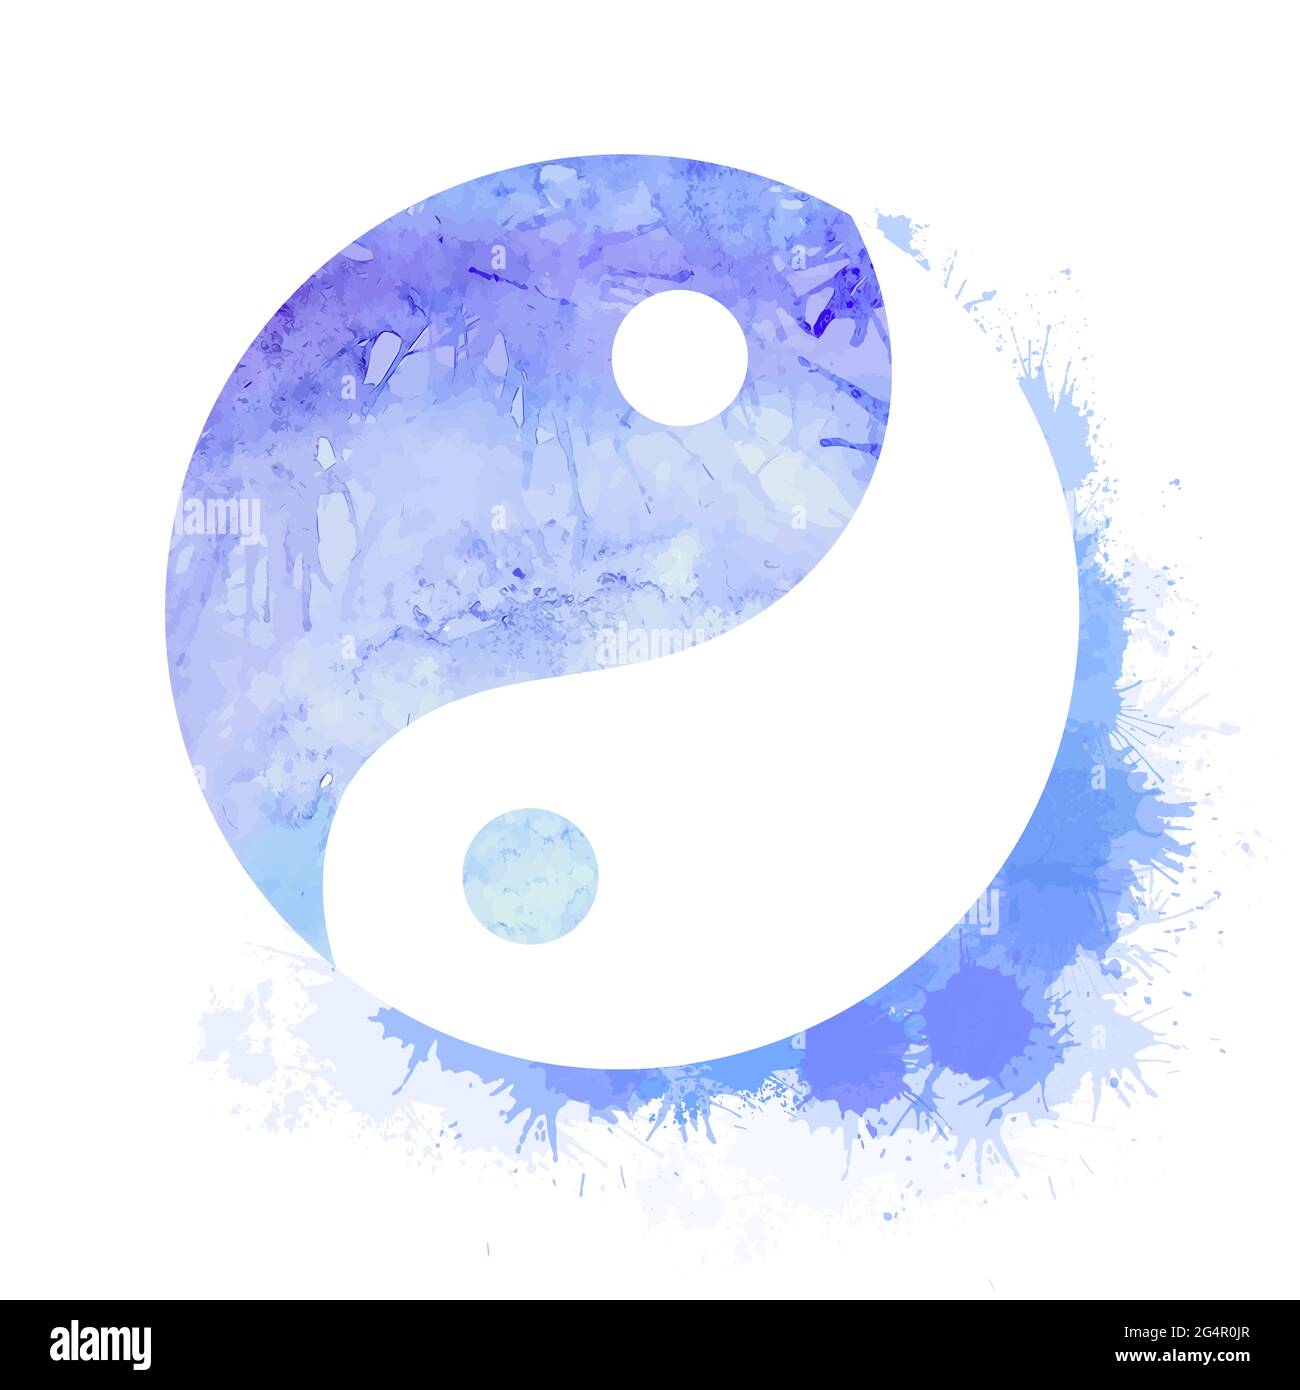 peace symbol in buddhism